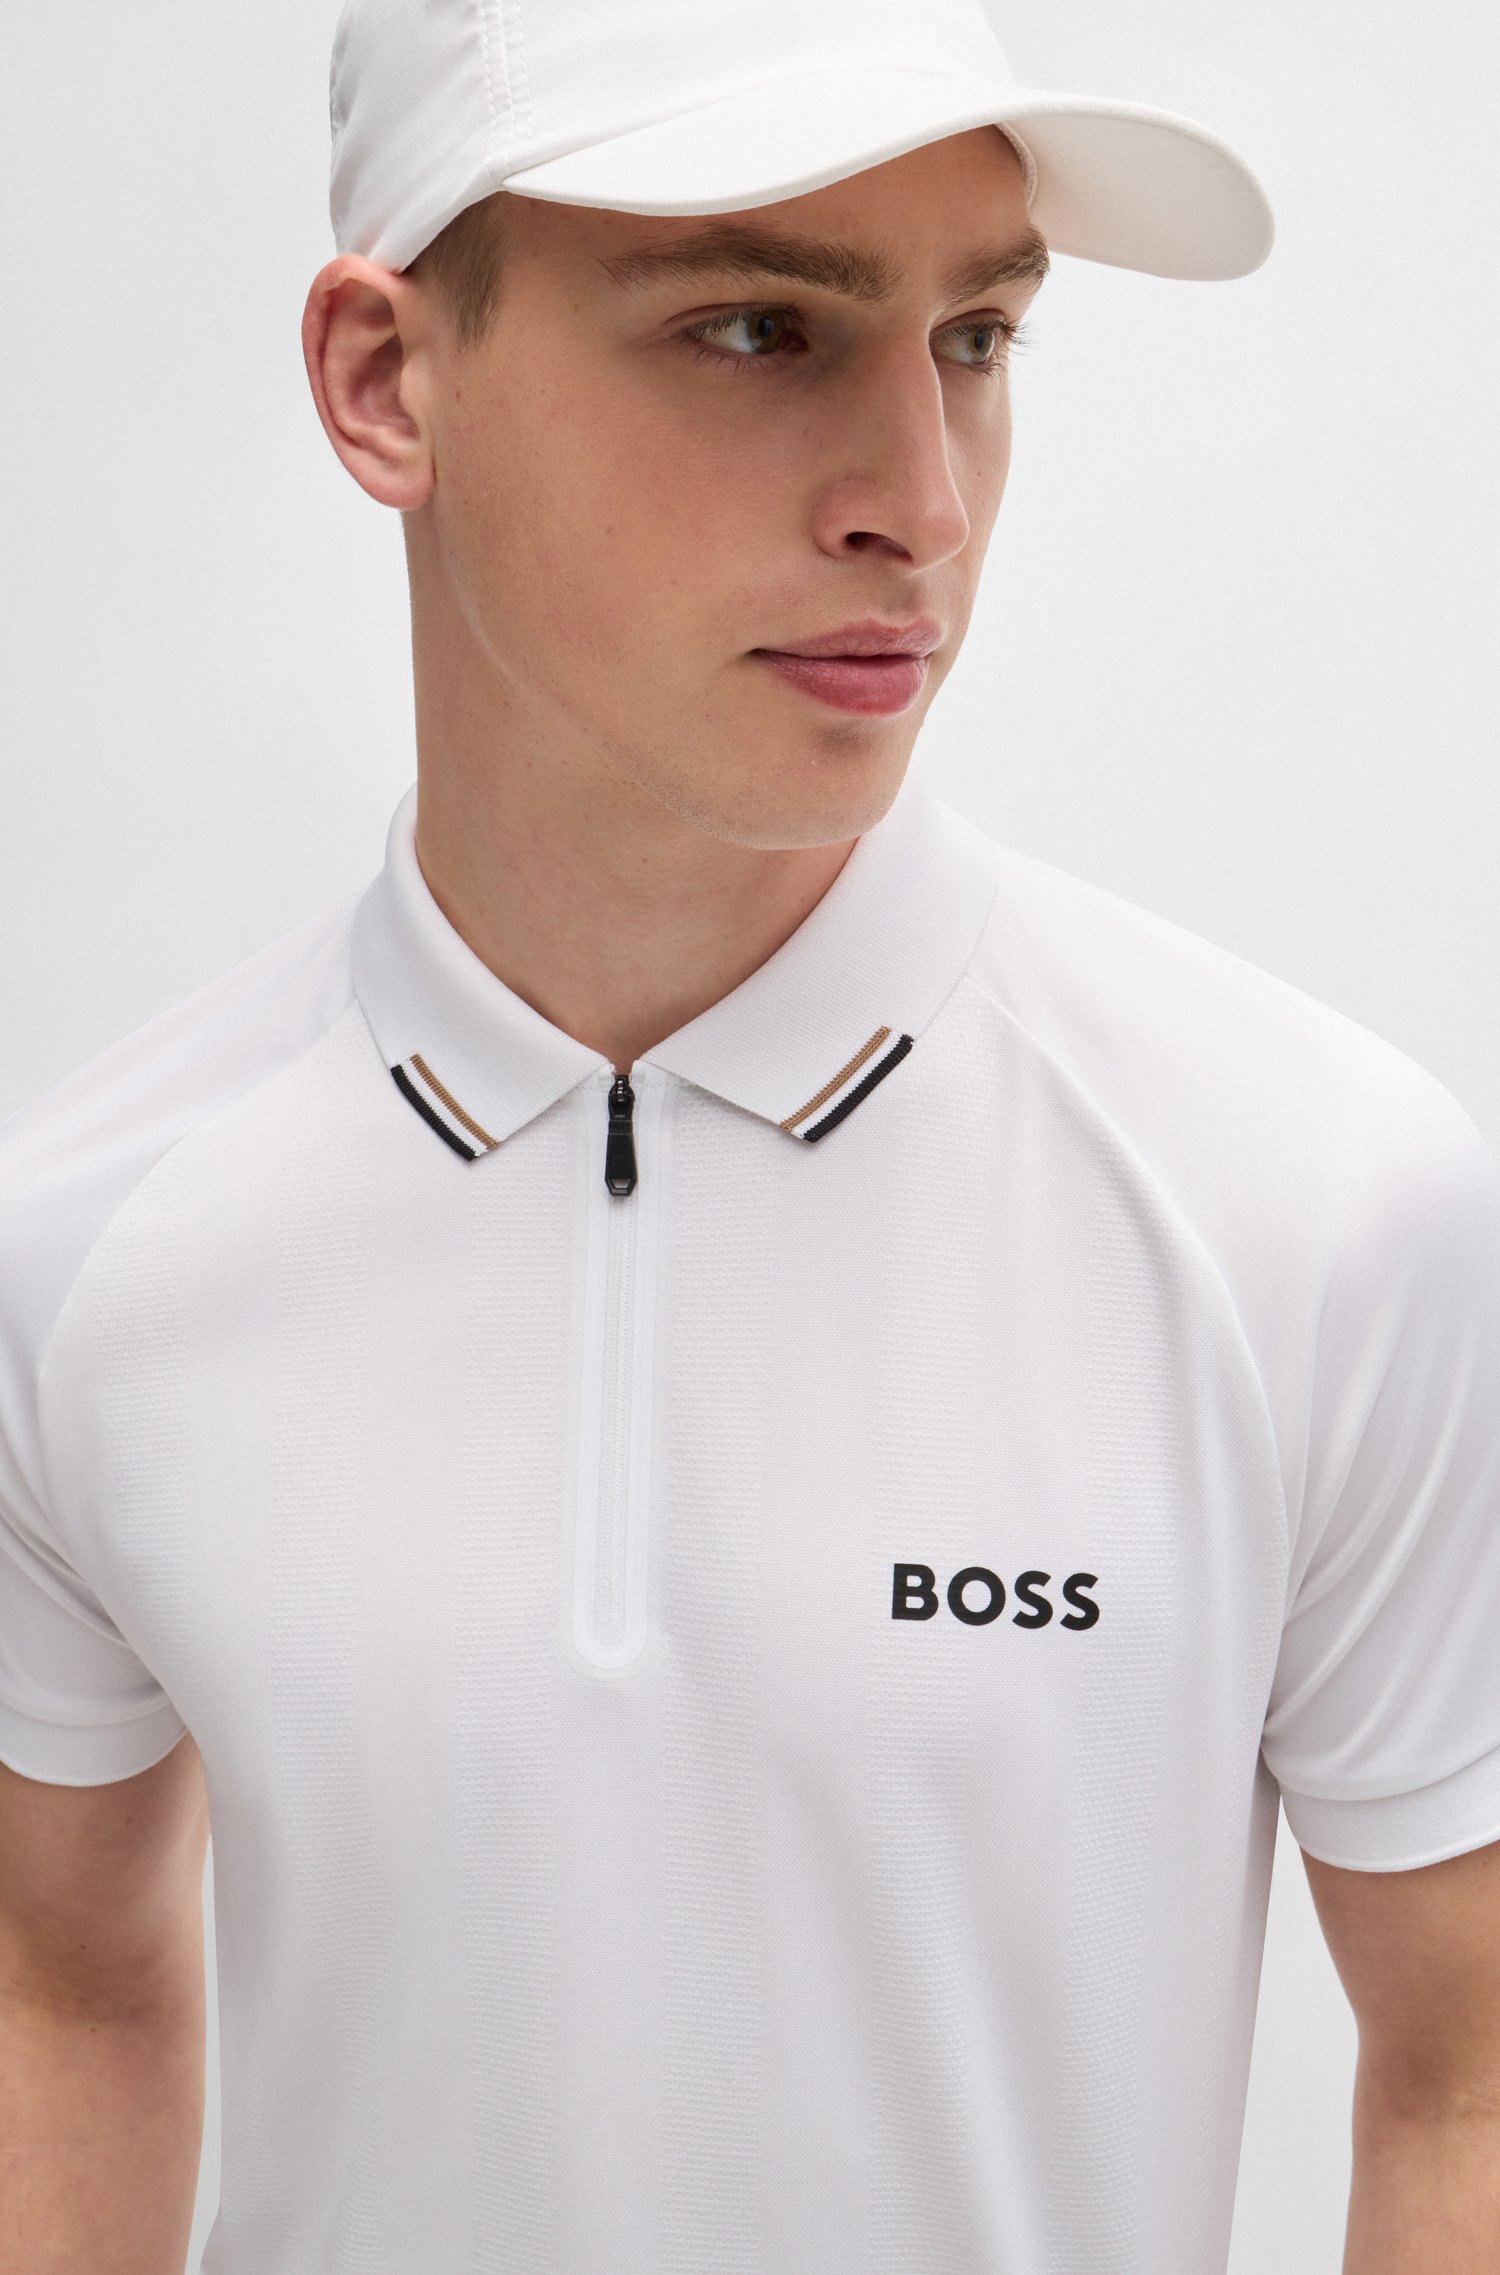 BOSS x Matteo Berrettini polo shirt with popcorn stripe